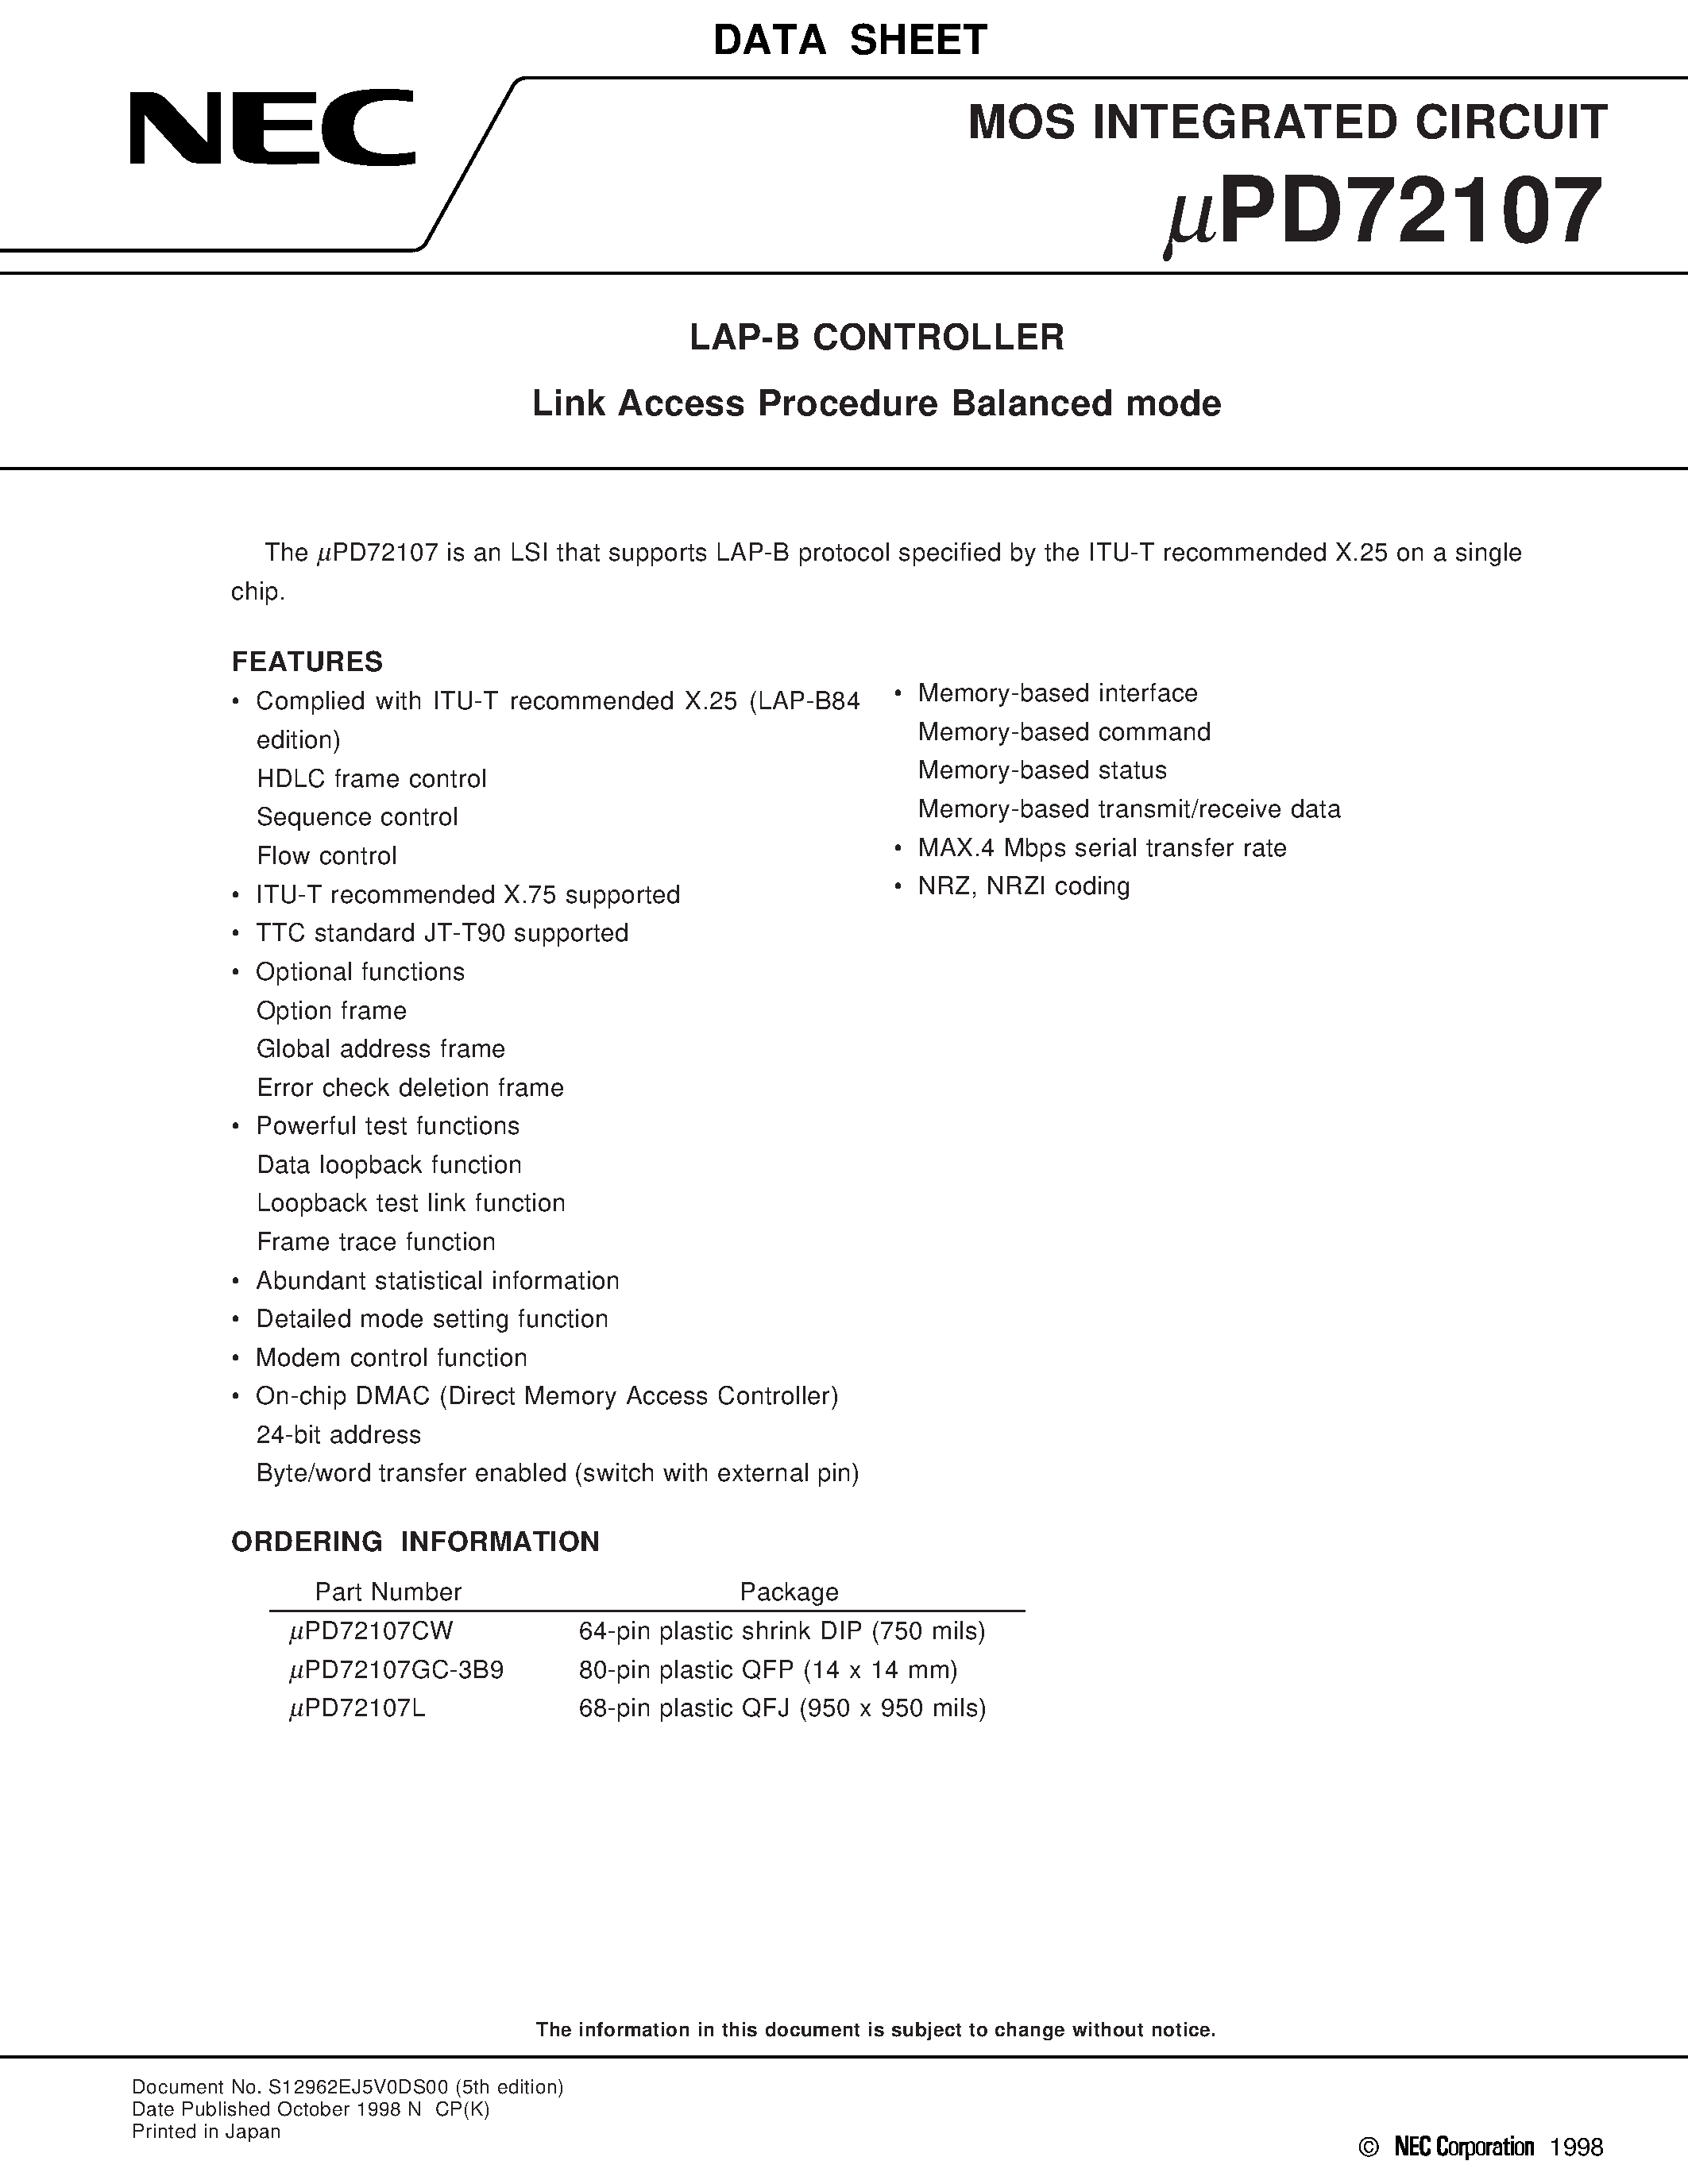 Datasheet uPD72107L - LAP-B CONTROLLER(Link Access Procedure Balanced mode) page 1